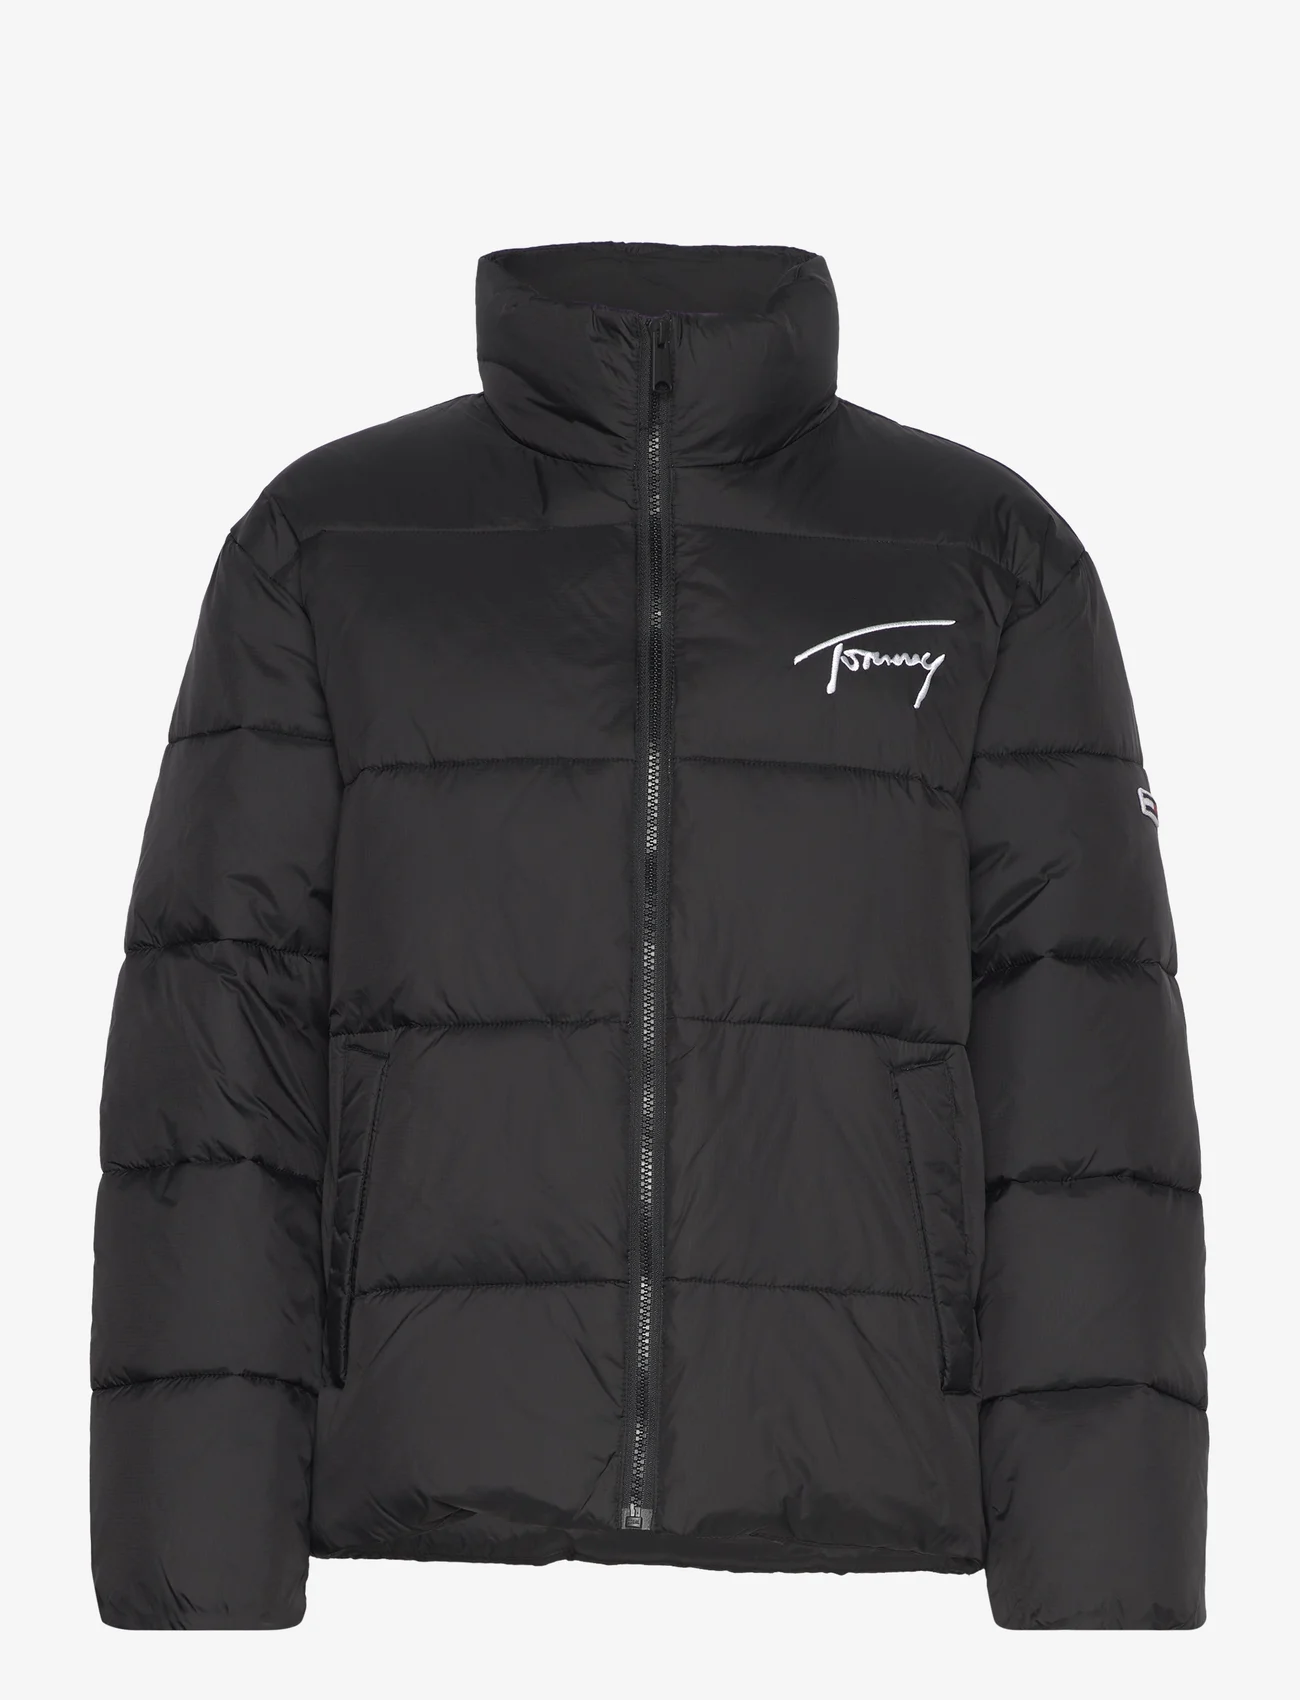 Tommy Jeans - TJW SIGNATURE MODERN PUFFER - winter jacket - black - 0